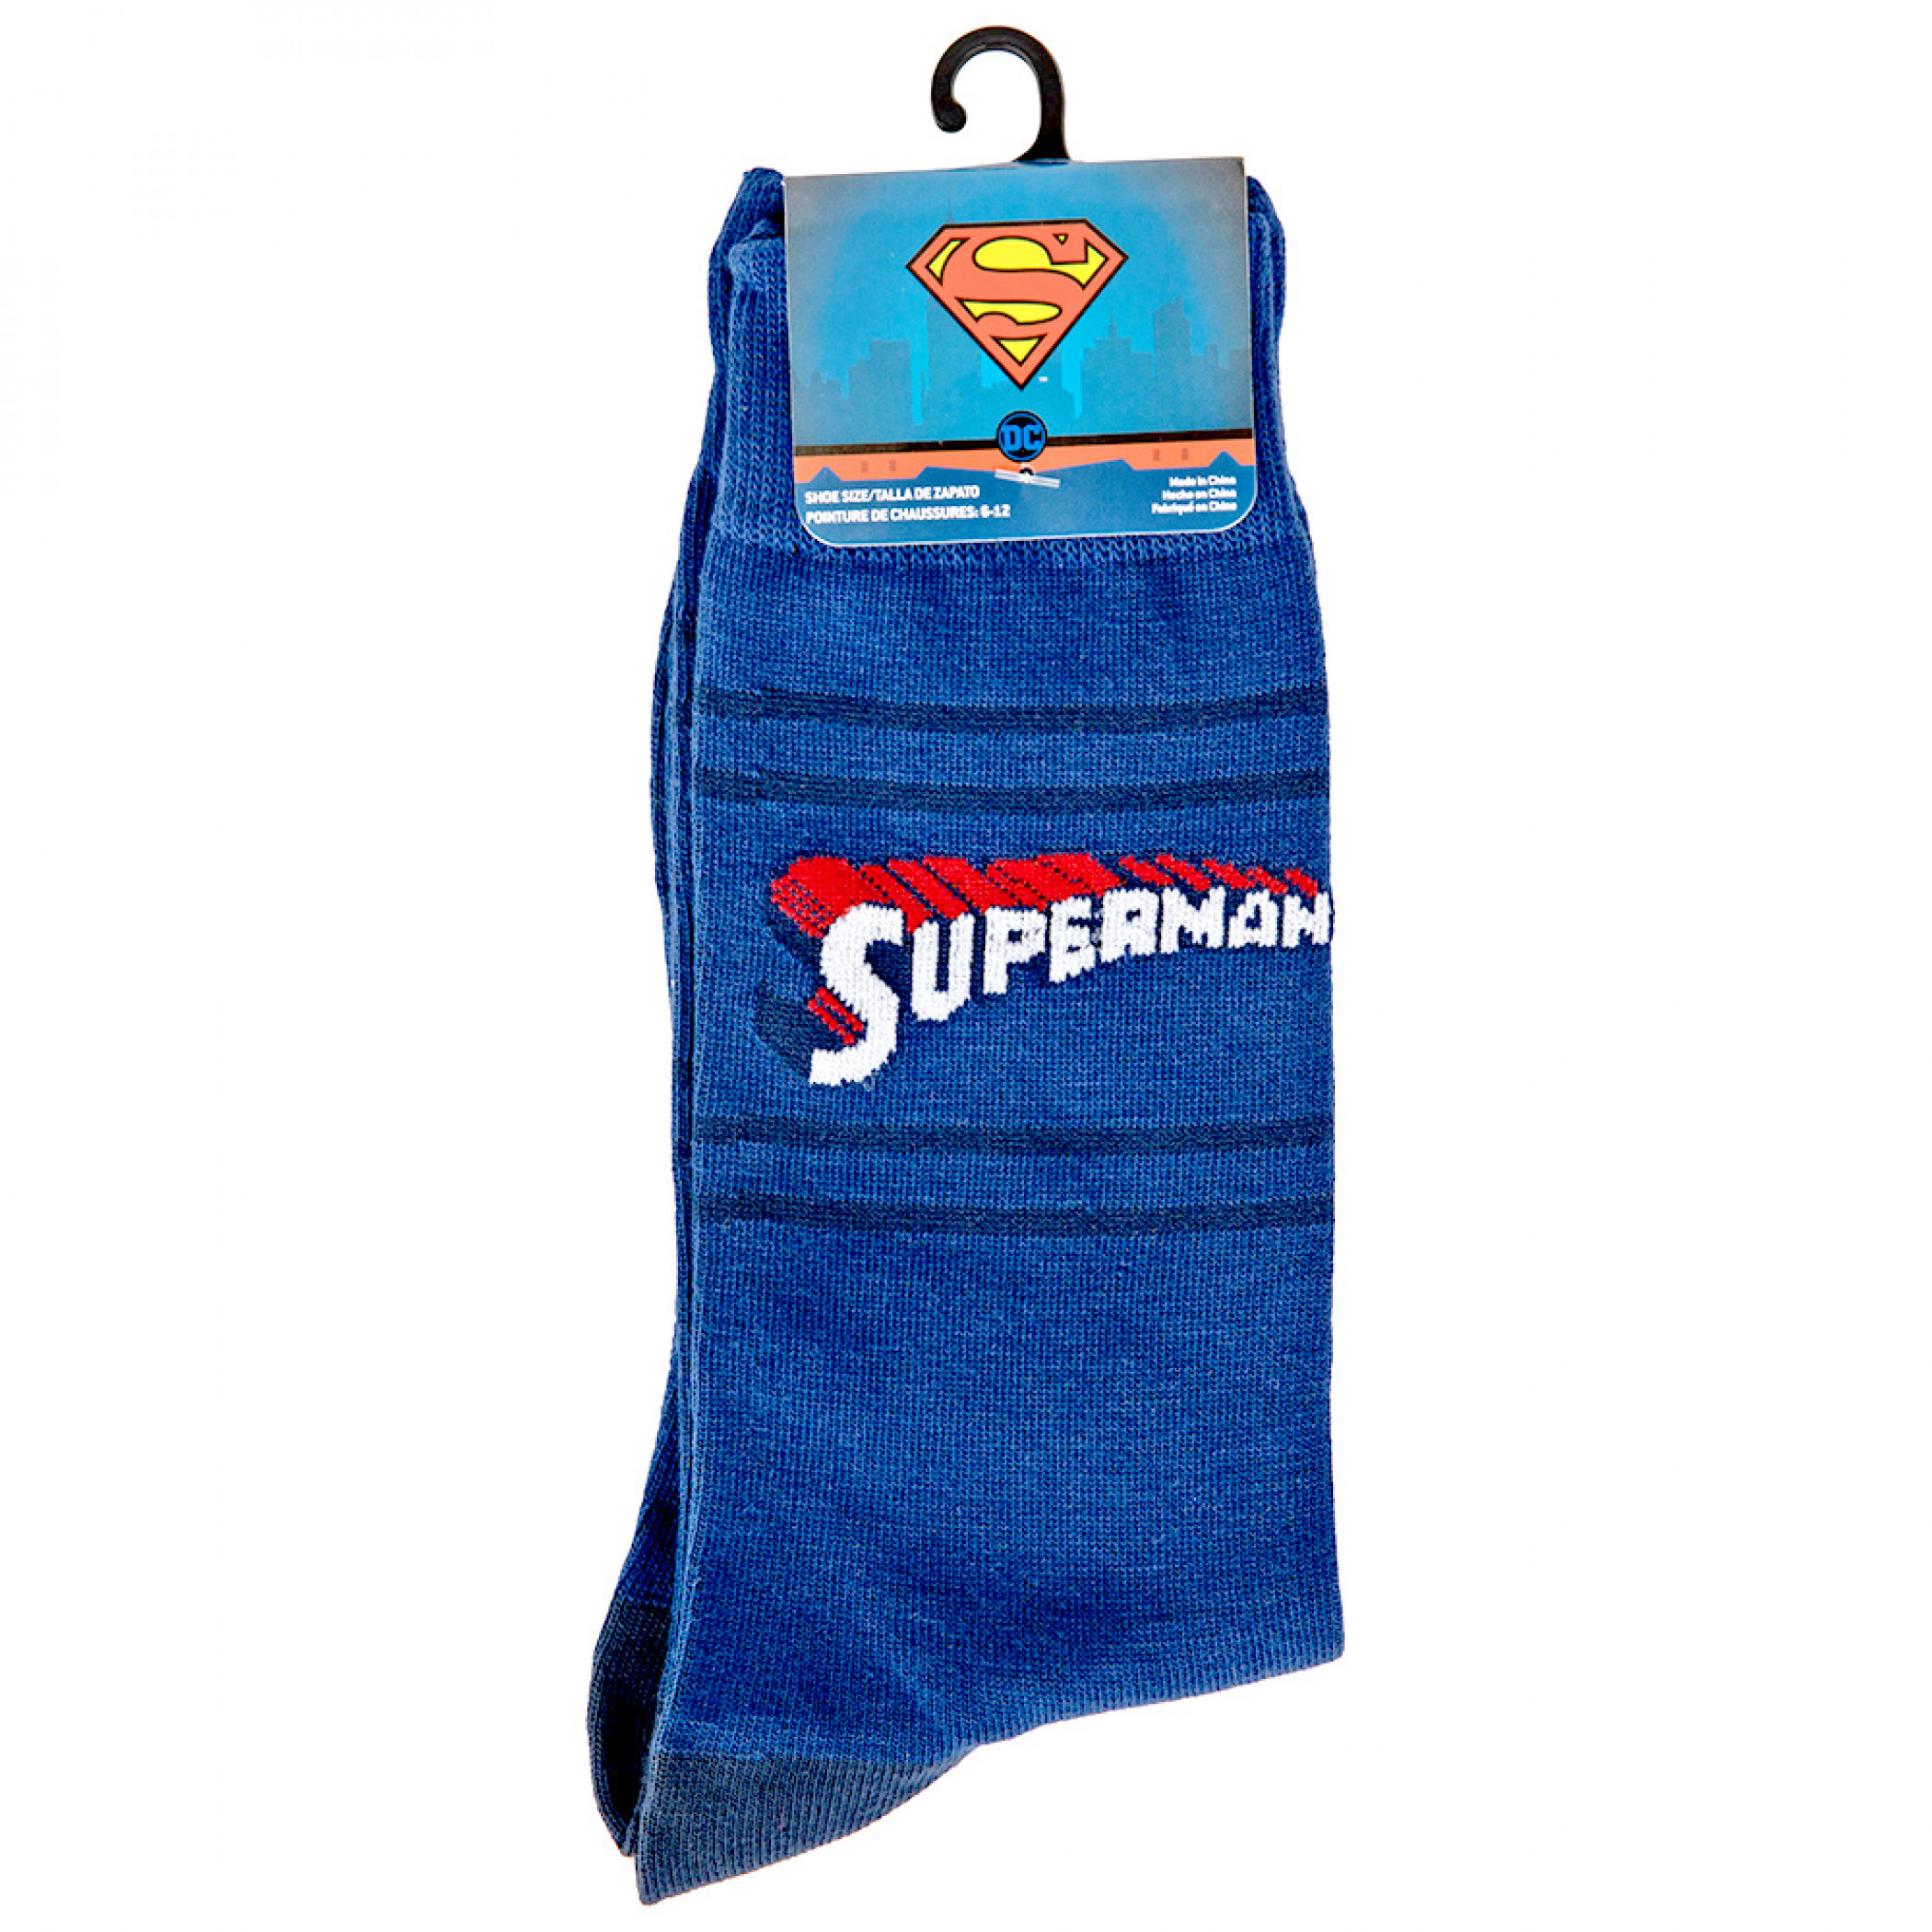 Superman Retro Title Logo Crew Socks